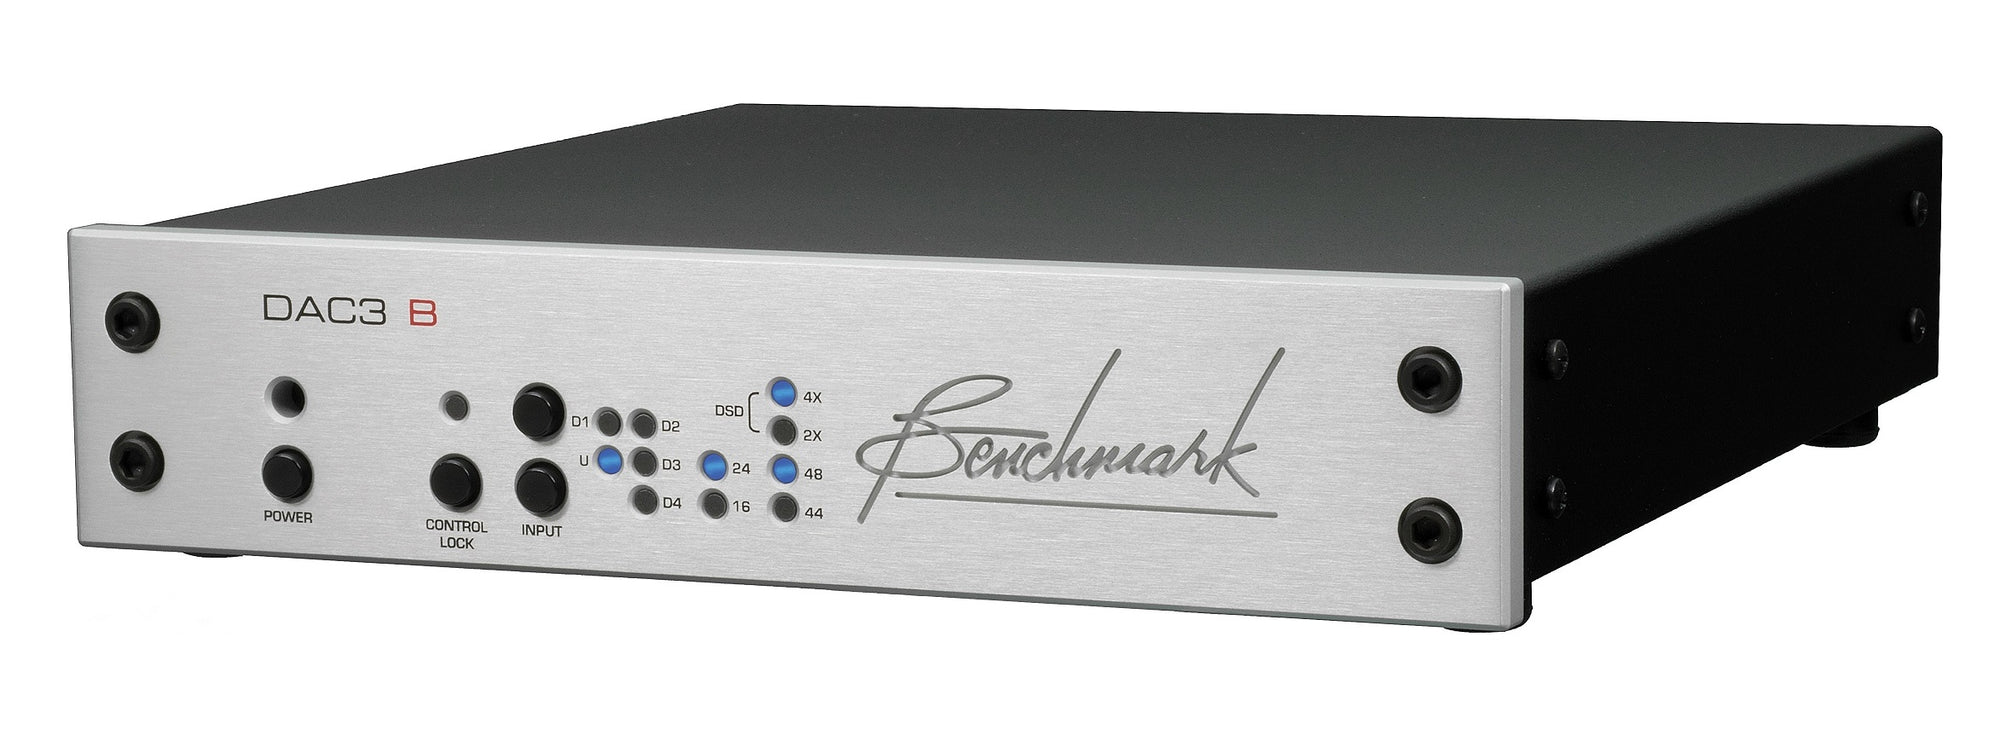 Benchmark DAC3 B - Digital to Analog Converter